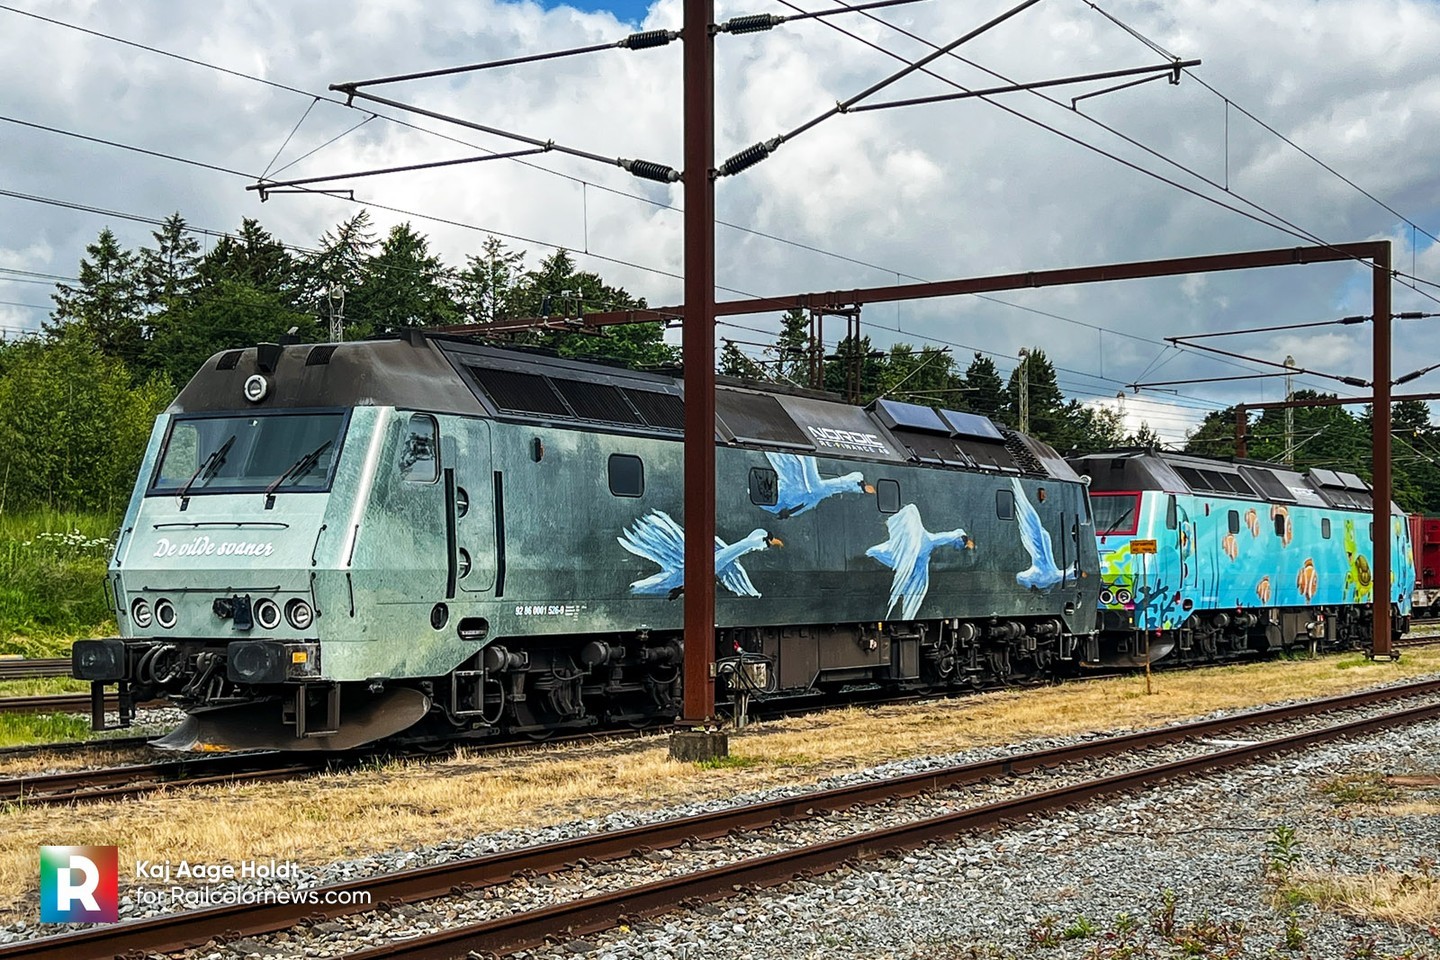 📷 by Kaj Aage Holdt 🇩🇰 Litra ME: A colorful comeback with a trilogy of Danish fairy tales ⬆️ A free article on Railcolor News has more details and photos
.
.
.
.
.
#NordicReFinance #LitraME #DBCargoScandinavia #Denlillehavfrue #diesellocomotive #TheLittleMermaid #Devildesvaner #diesellok #TheWildSwans #railways #railways_of_europe #railcolornews #HCAndersen #HansChristianAndersen #train #Snedronningen #TheSnowQueen #ME1533 #ME1526 #ME1524 #trainspotter_europe #railways_of_denmark #melokomotiv #togspotter #henschel #me_tema #danishtrains